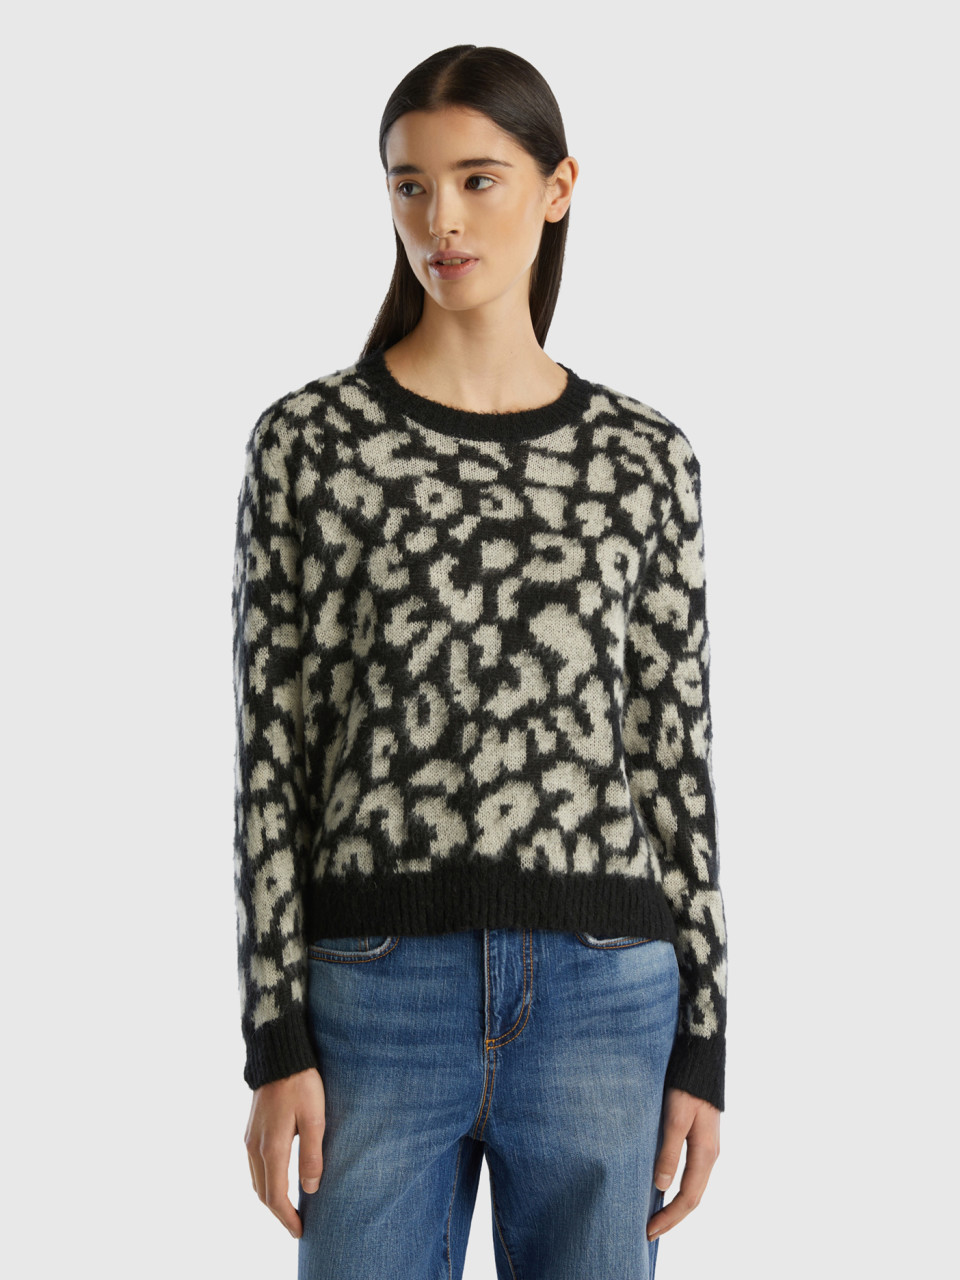 Benetton, Animal Print Sweater In Mohair Blend, Multi-color, Women